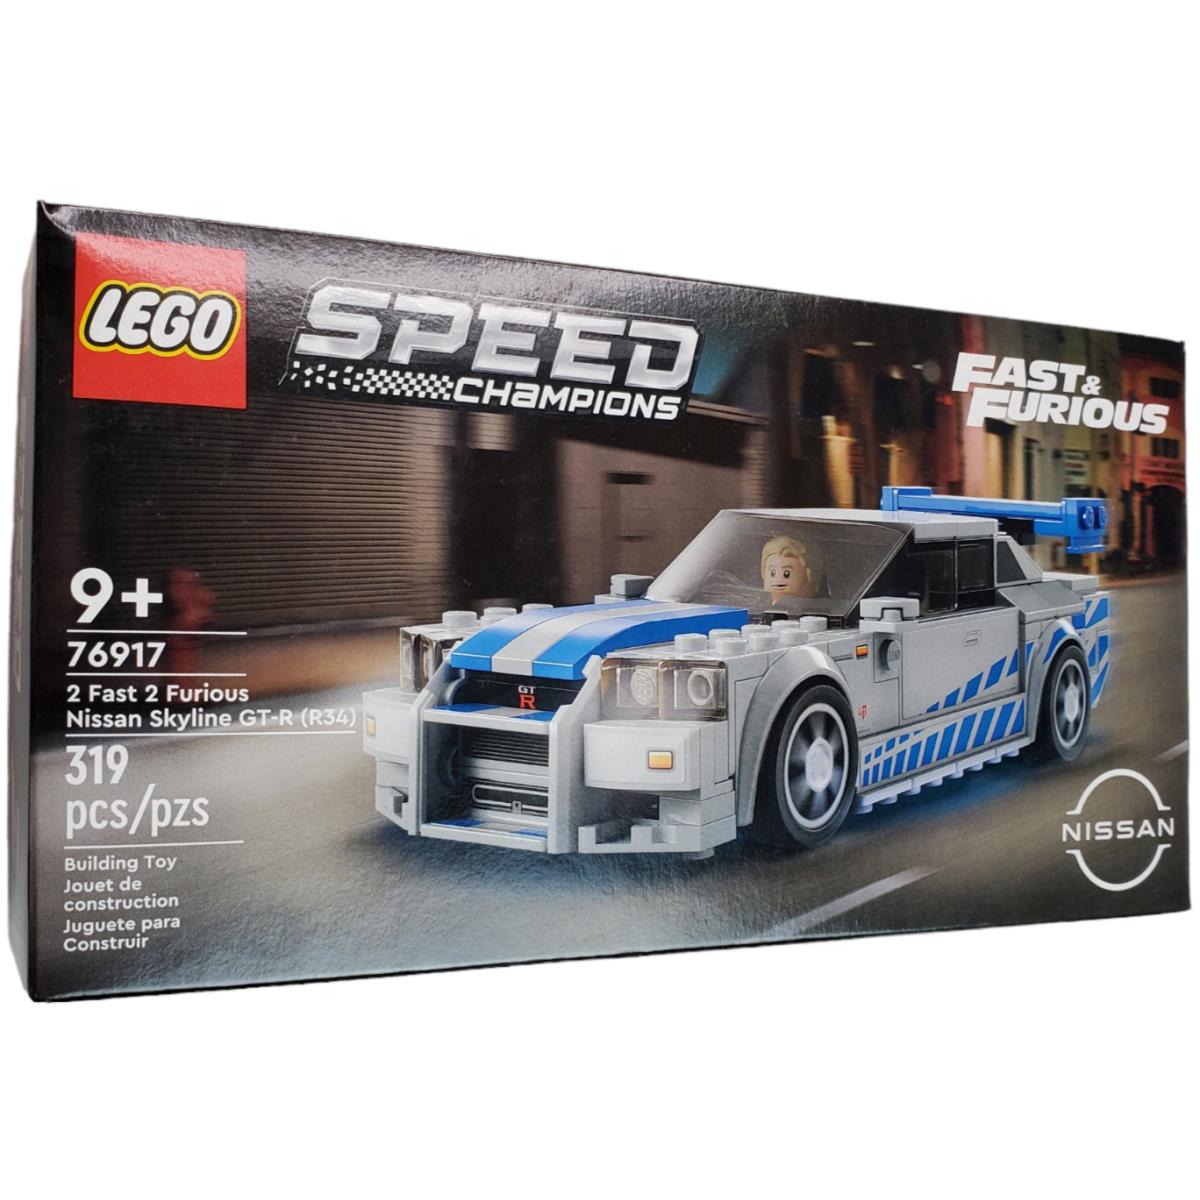 Lego 76917 Speed Champions 2 Fast 2 Furious Nissan Skyline Gt-r R34 319 Pcs